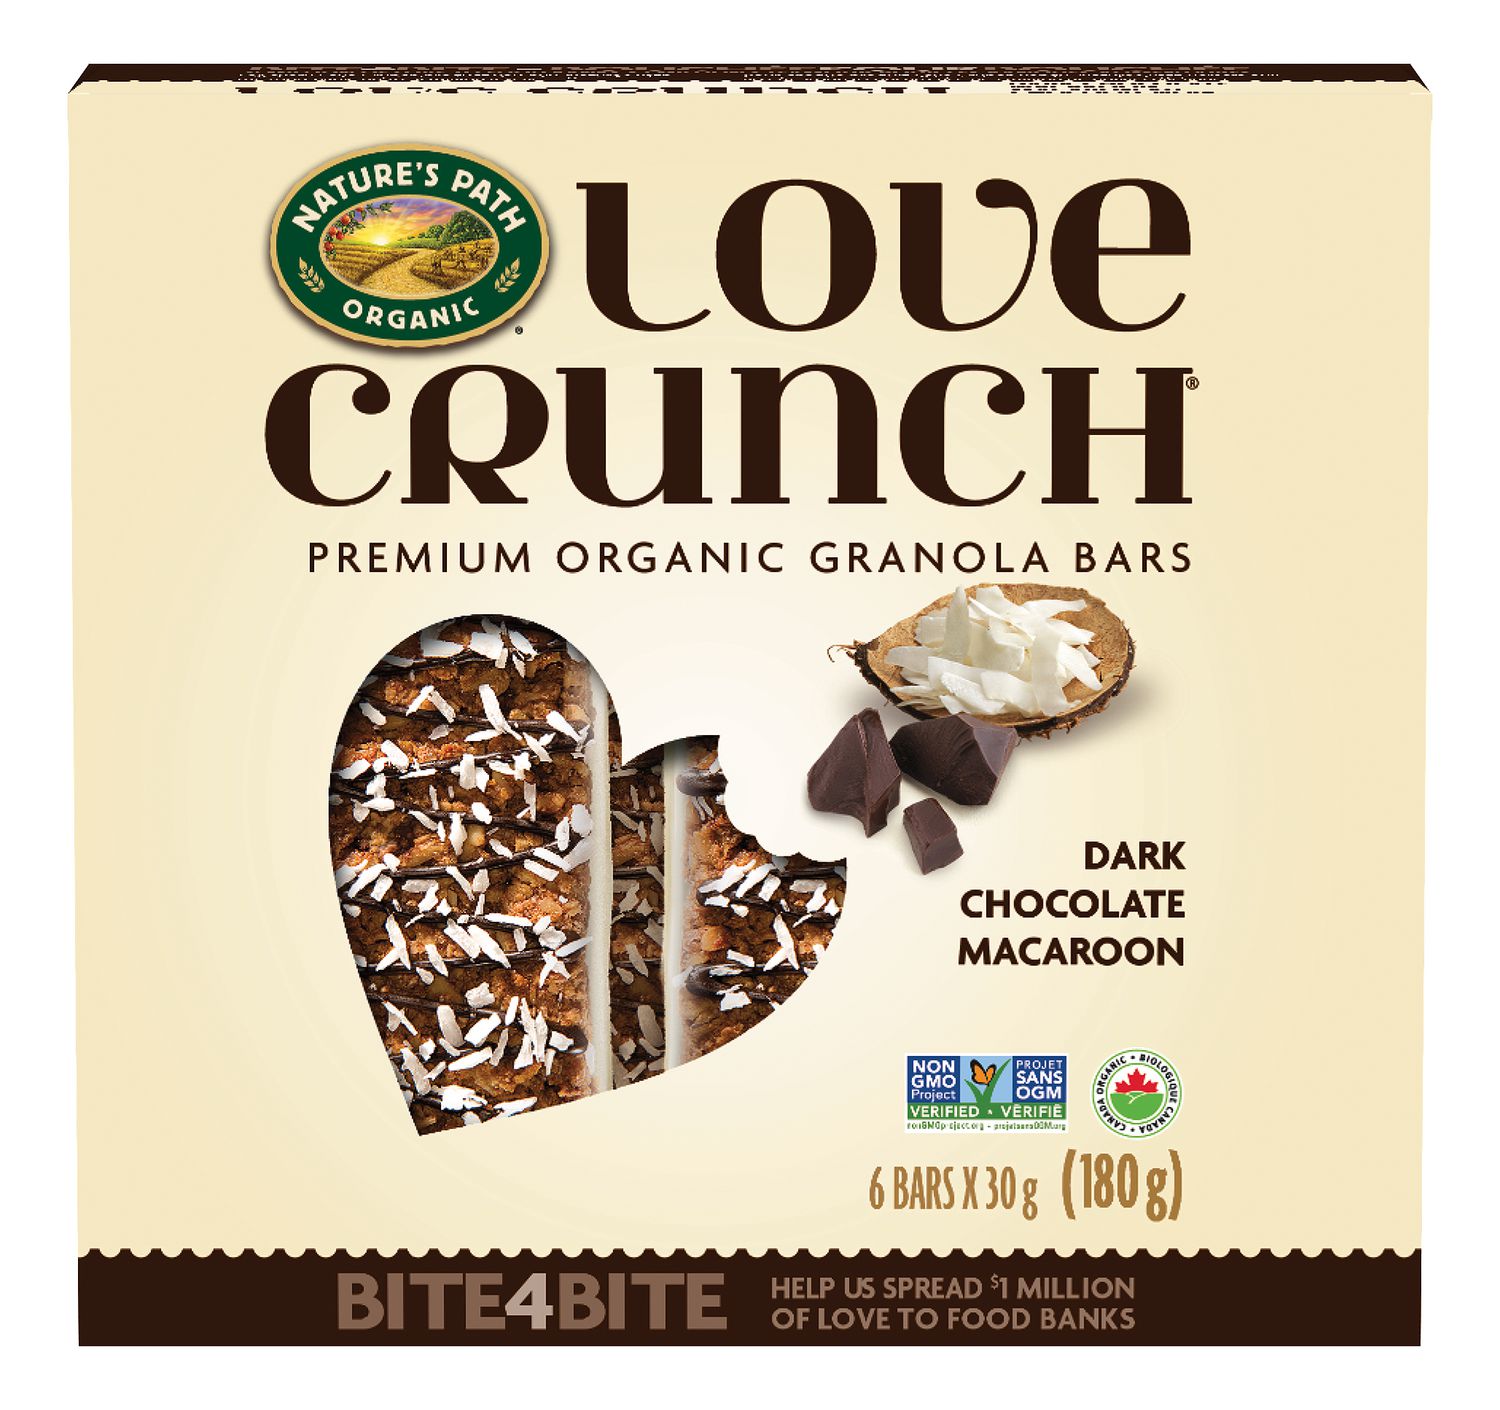 love crunch granola